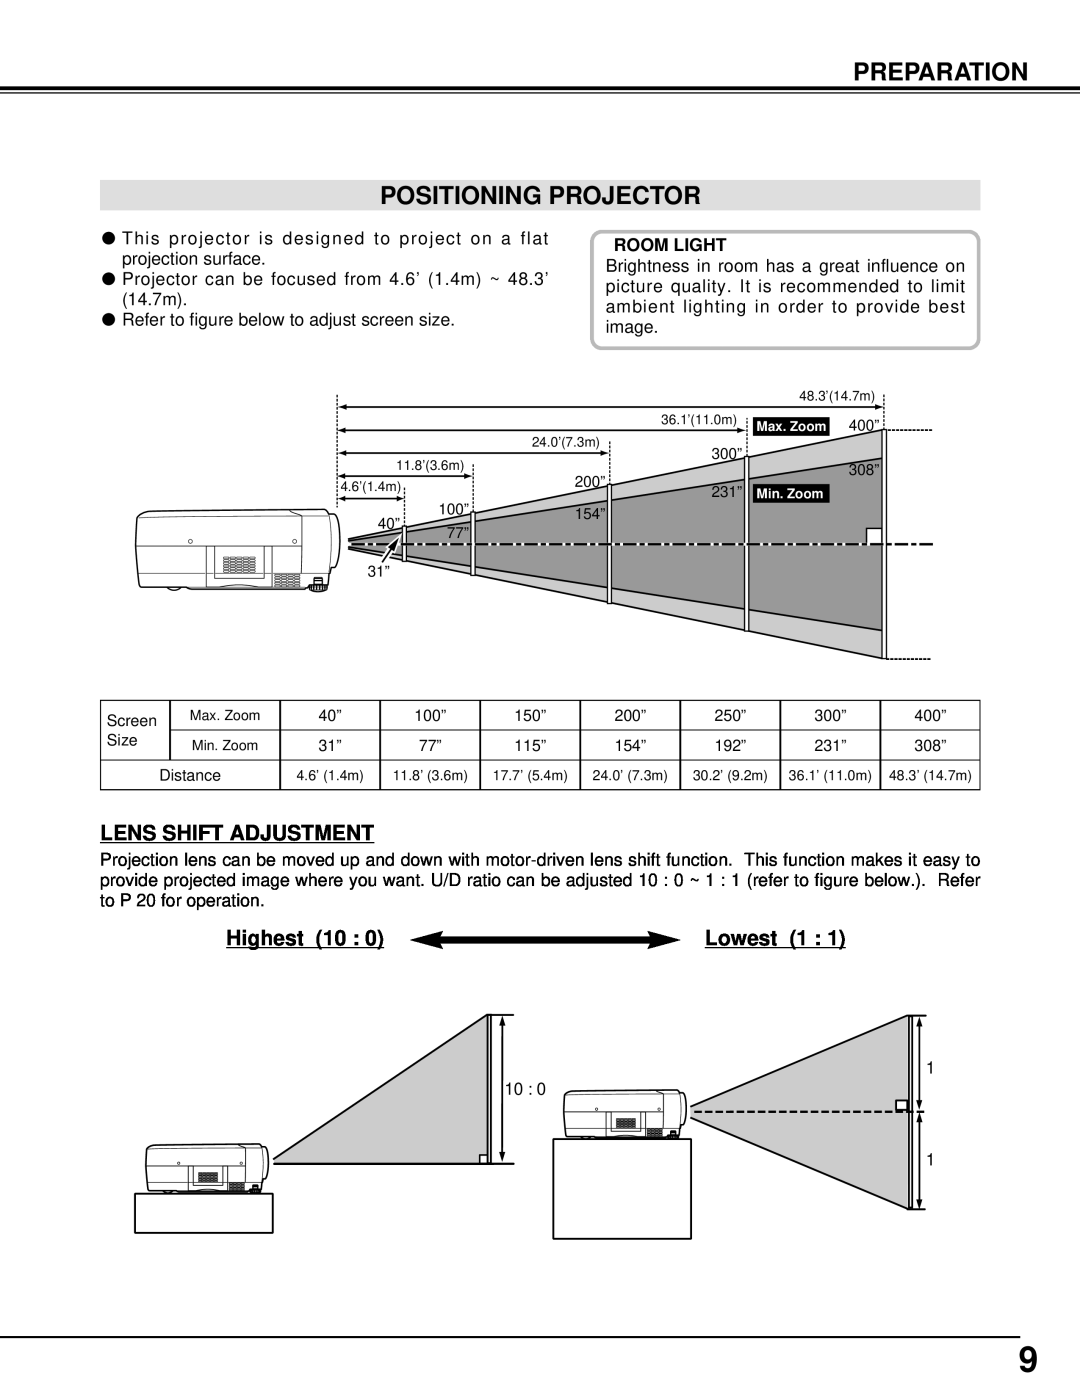 BOXLIGHT MP-41T manual Preparation Positioning Projector, Lens Shift Adjustment, Highest 10, Lowest 1 